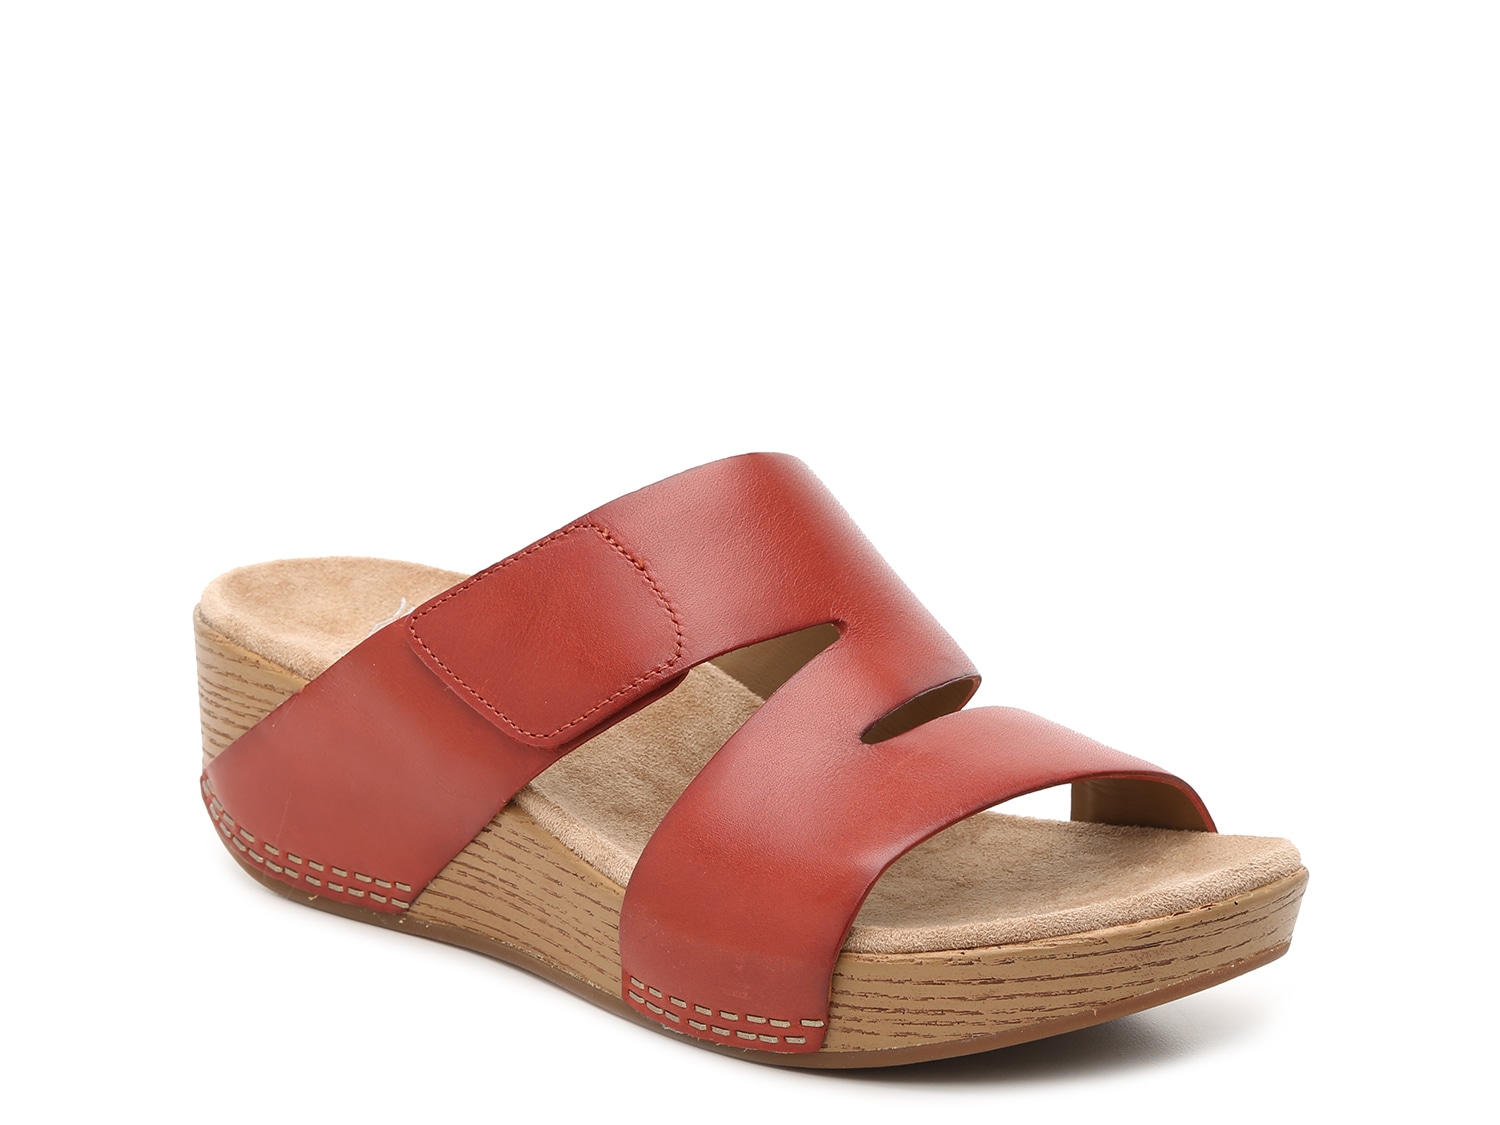 dansko shoes sandals